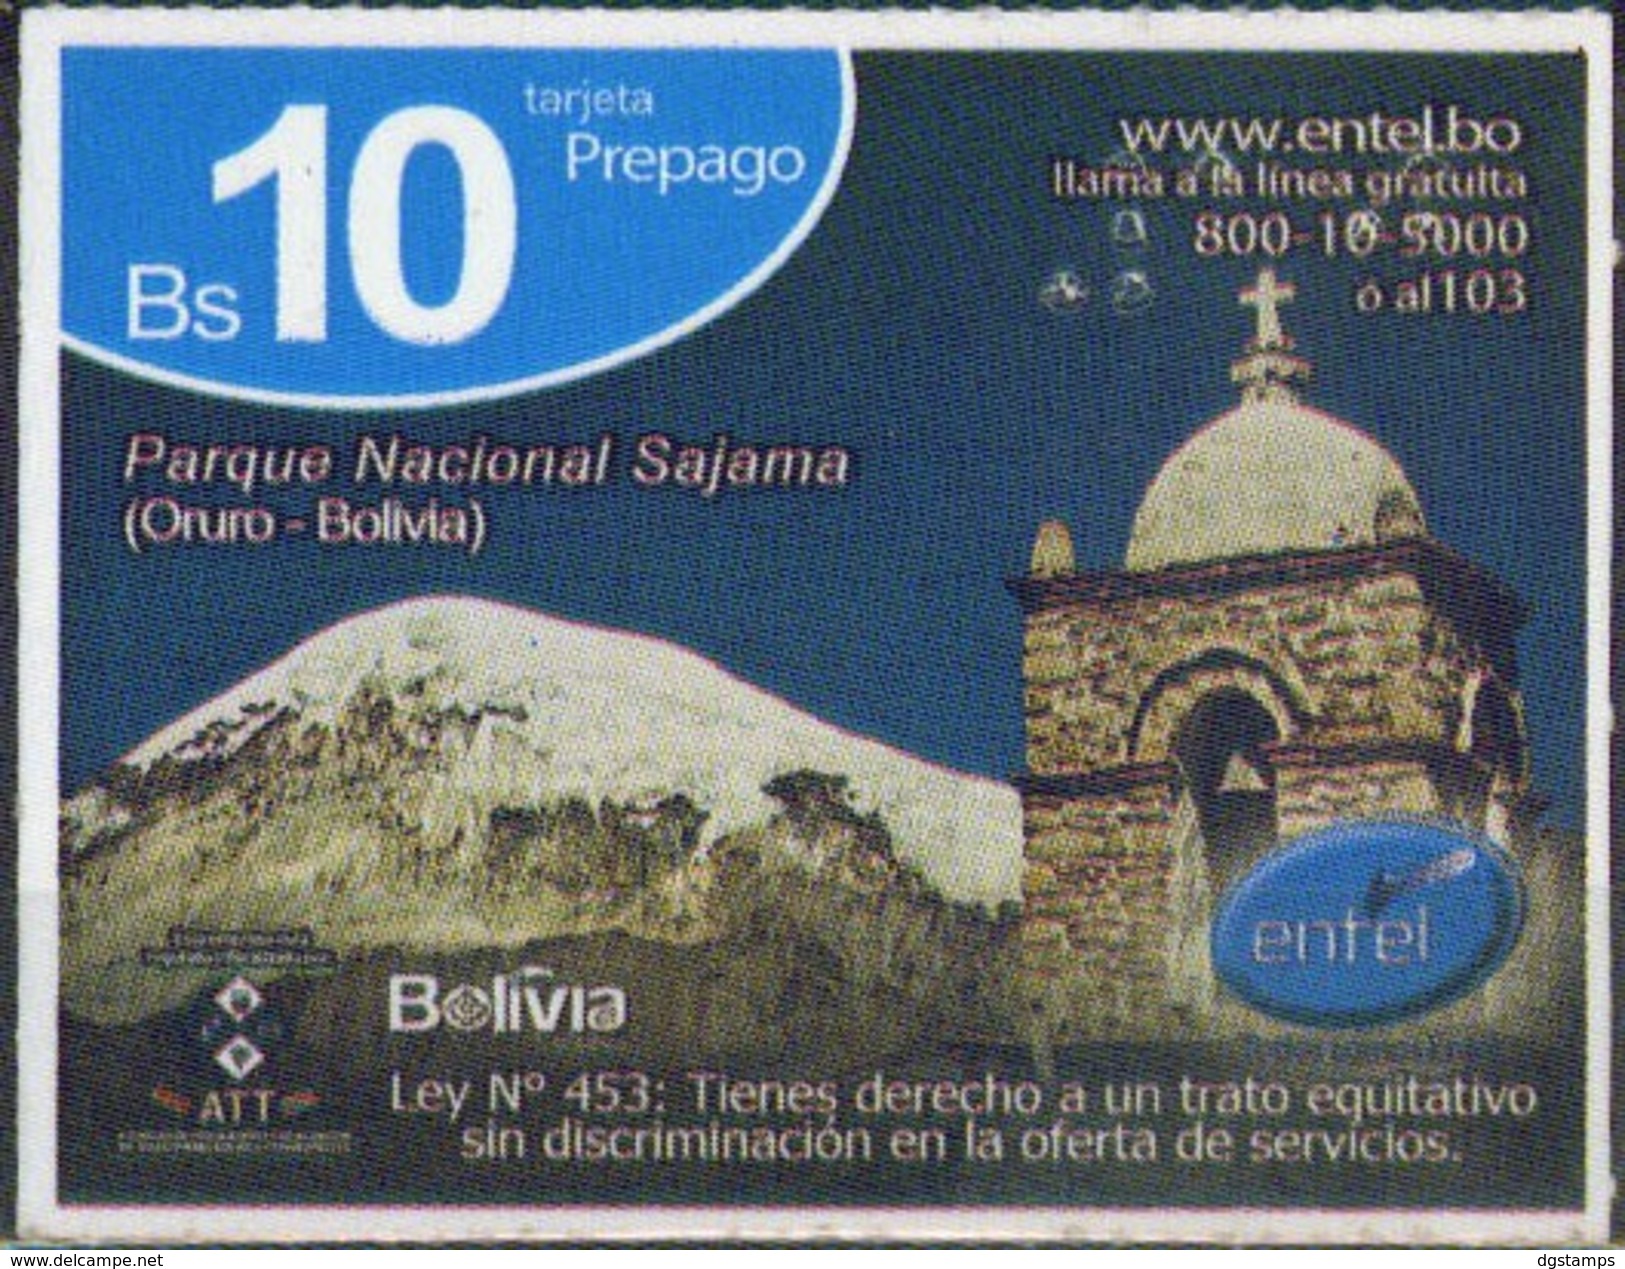 Bolivia 2017- 25-07-2018 Prepago ENTEL. Parque Nacional Sajama. Oruro. - Bolivien